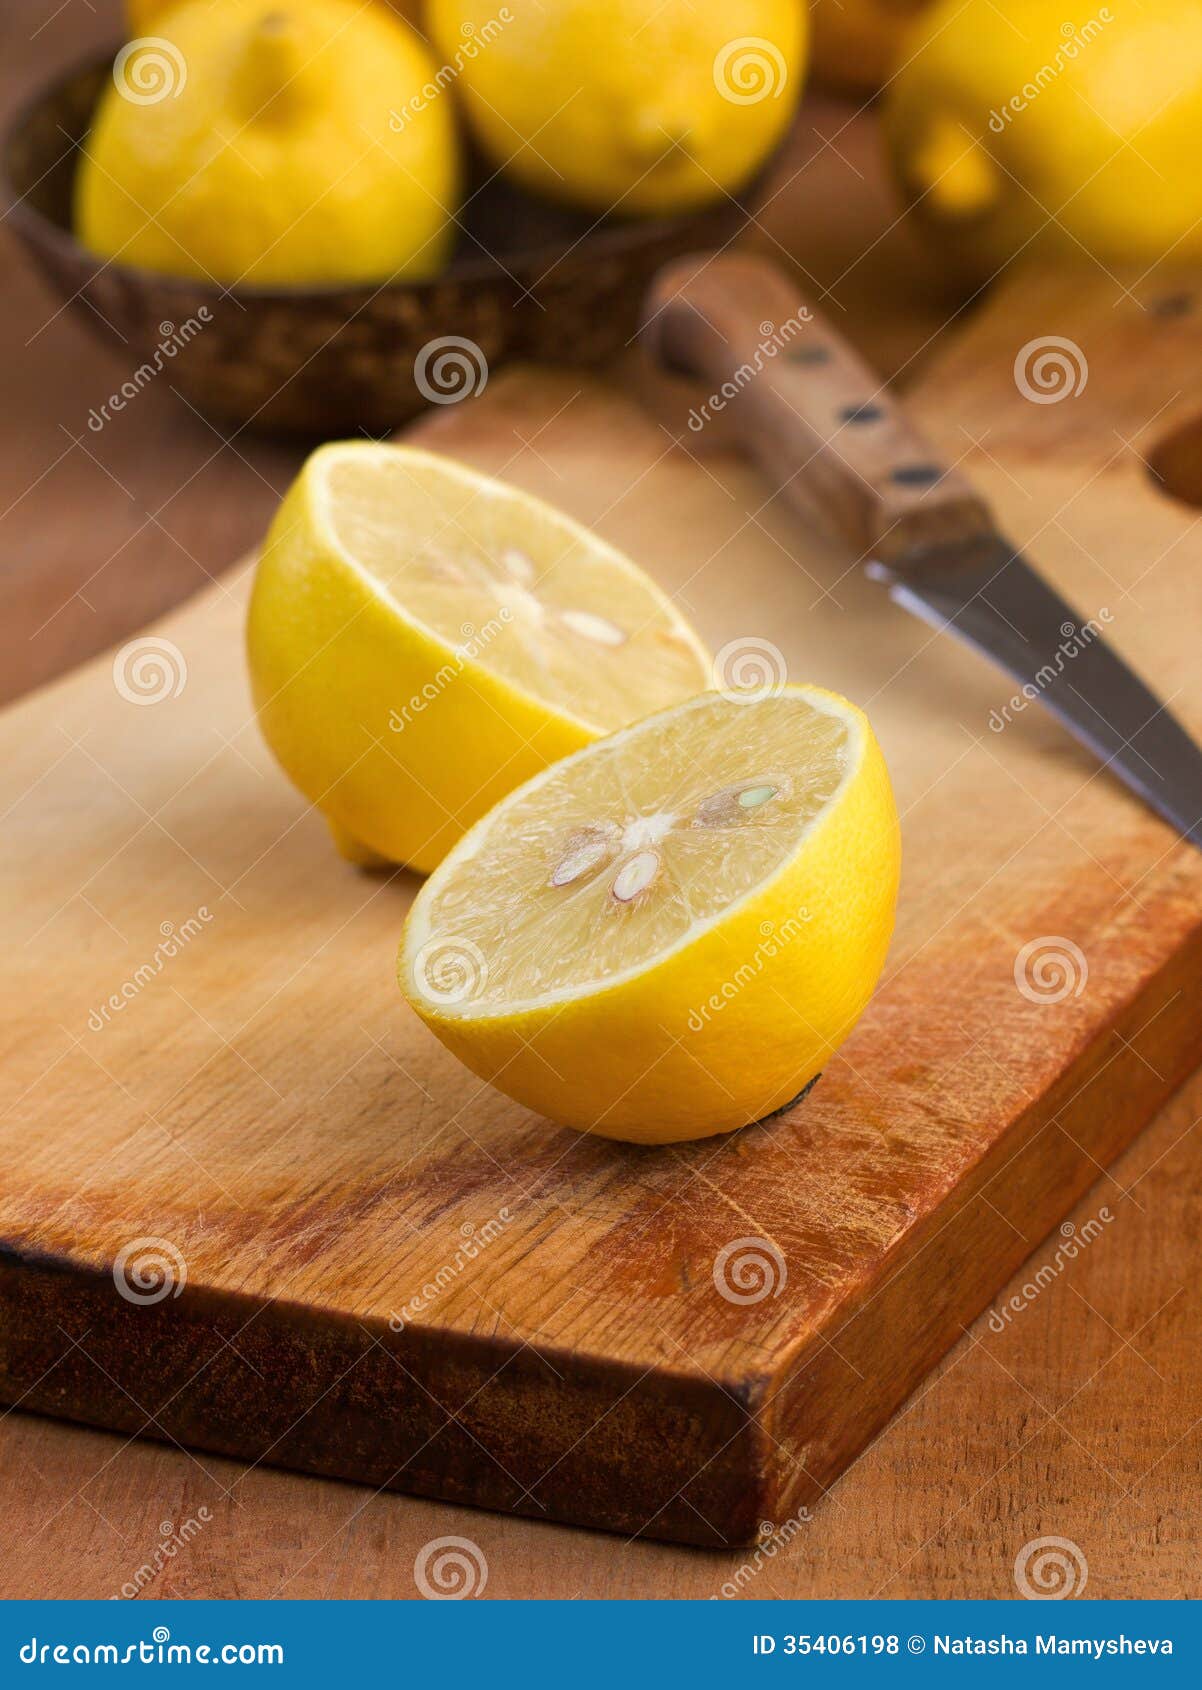 https://thumbs.dreamstime.com/z/sliced-lemons-cutting-board-wooden-background-35406198.jpg